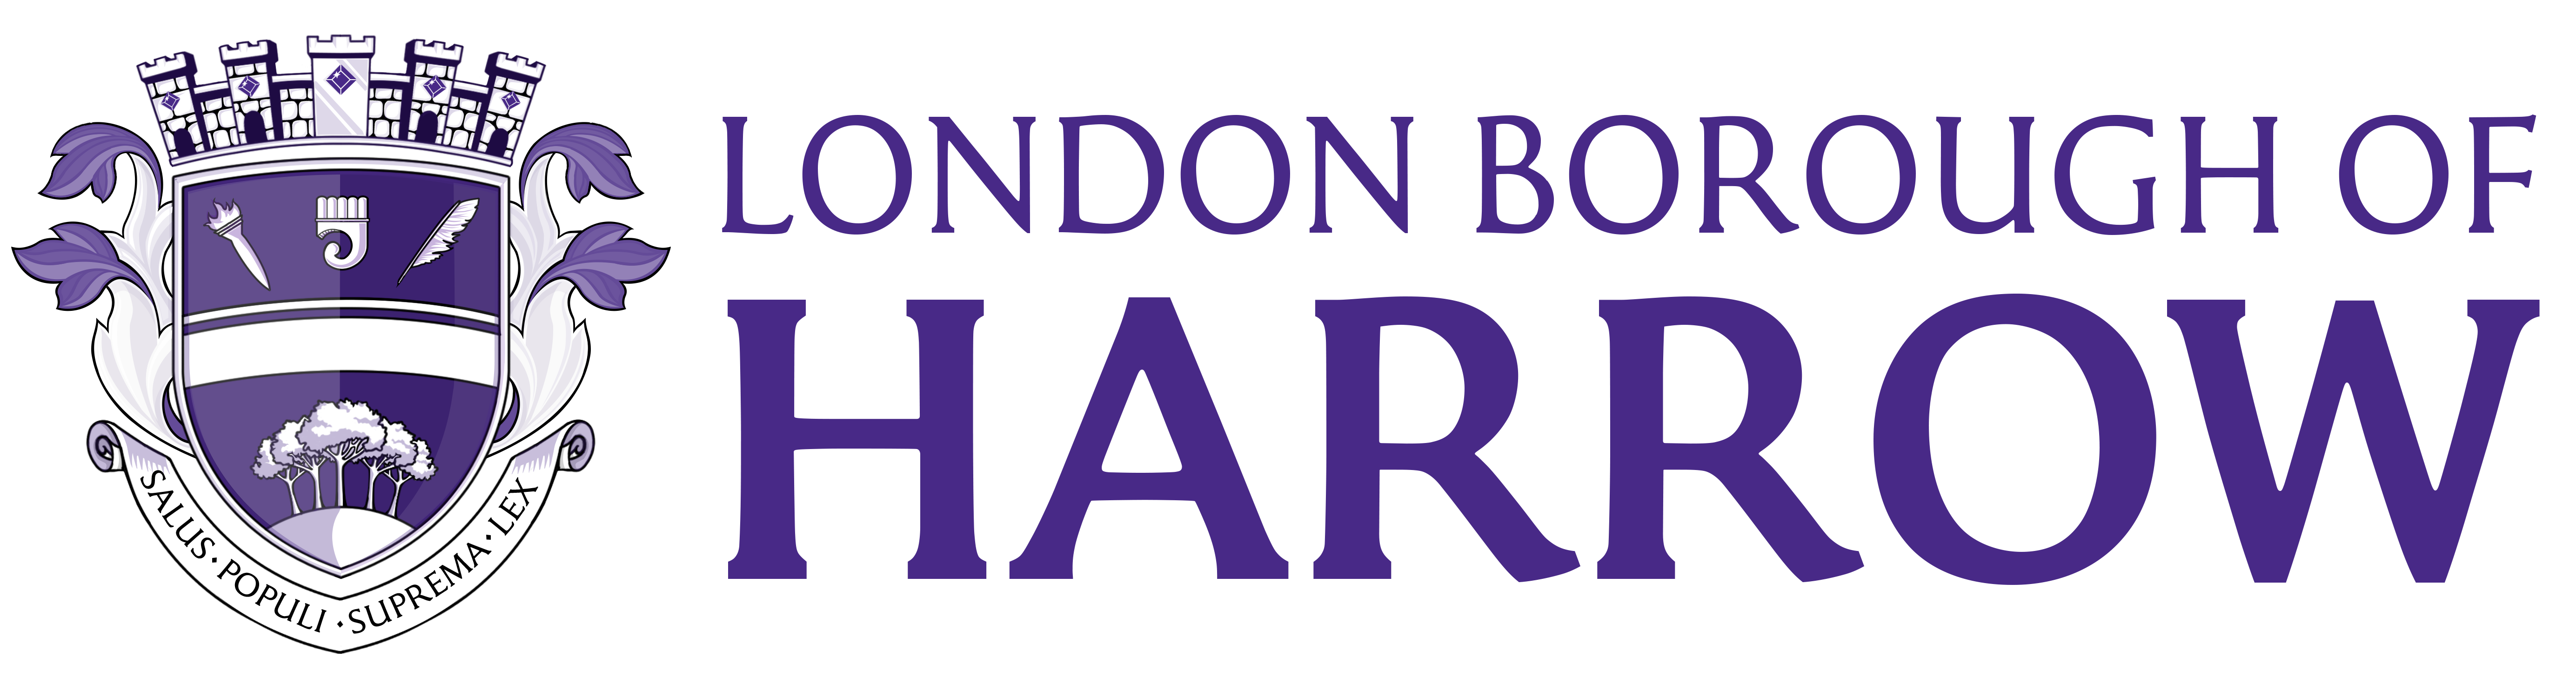 London Borough of Harrow logo